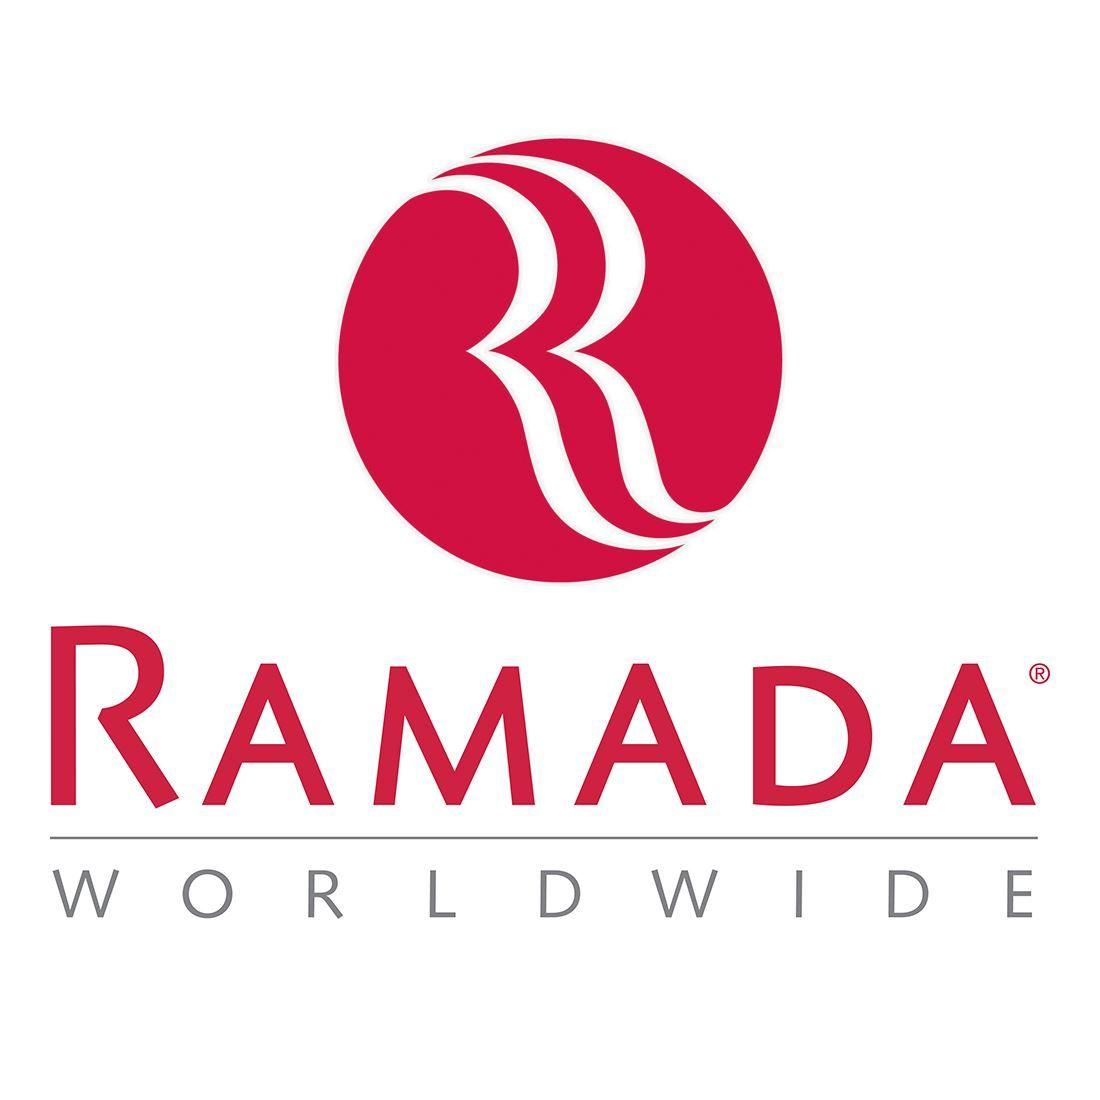 Ramada Logo - Ramada worldwide